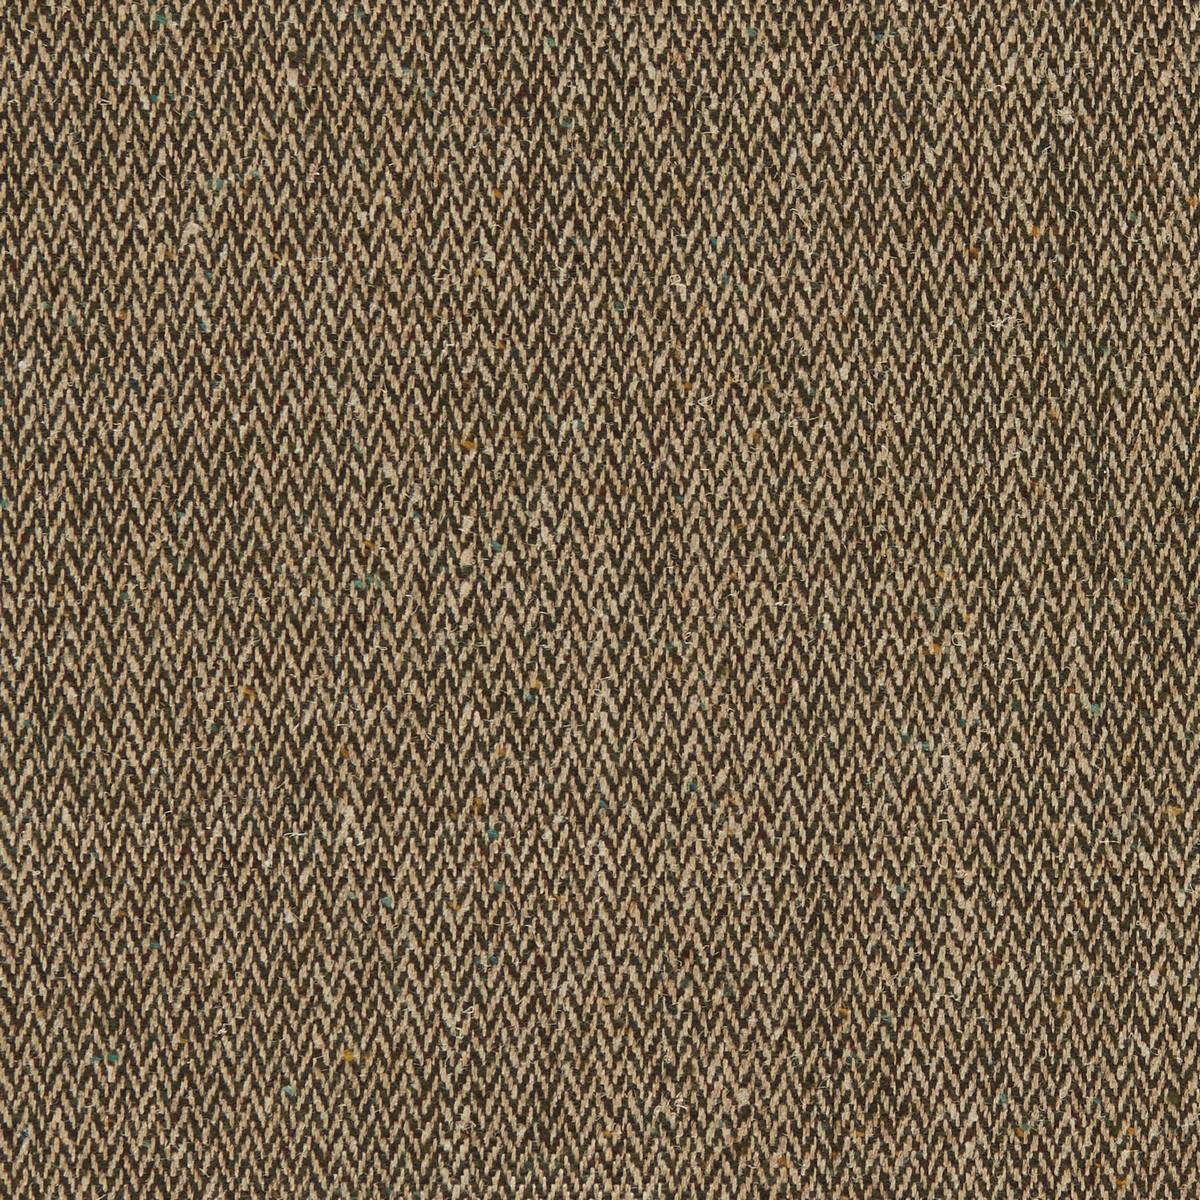 Brunswick Evergreen Fabric by William Morris & Co.